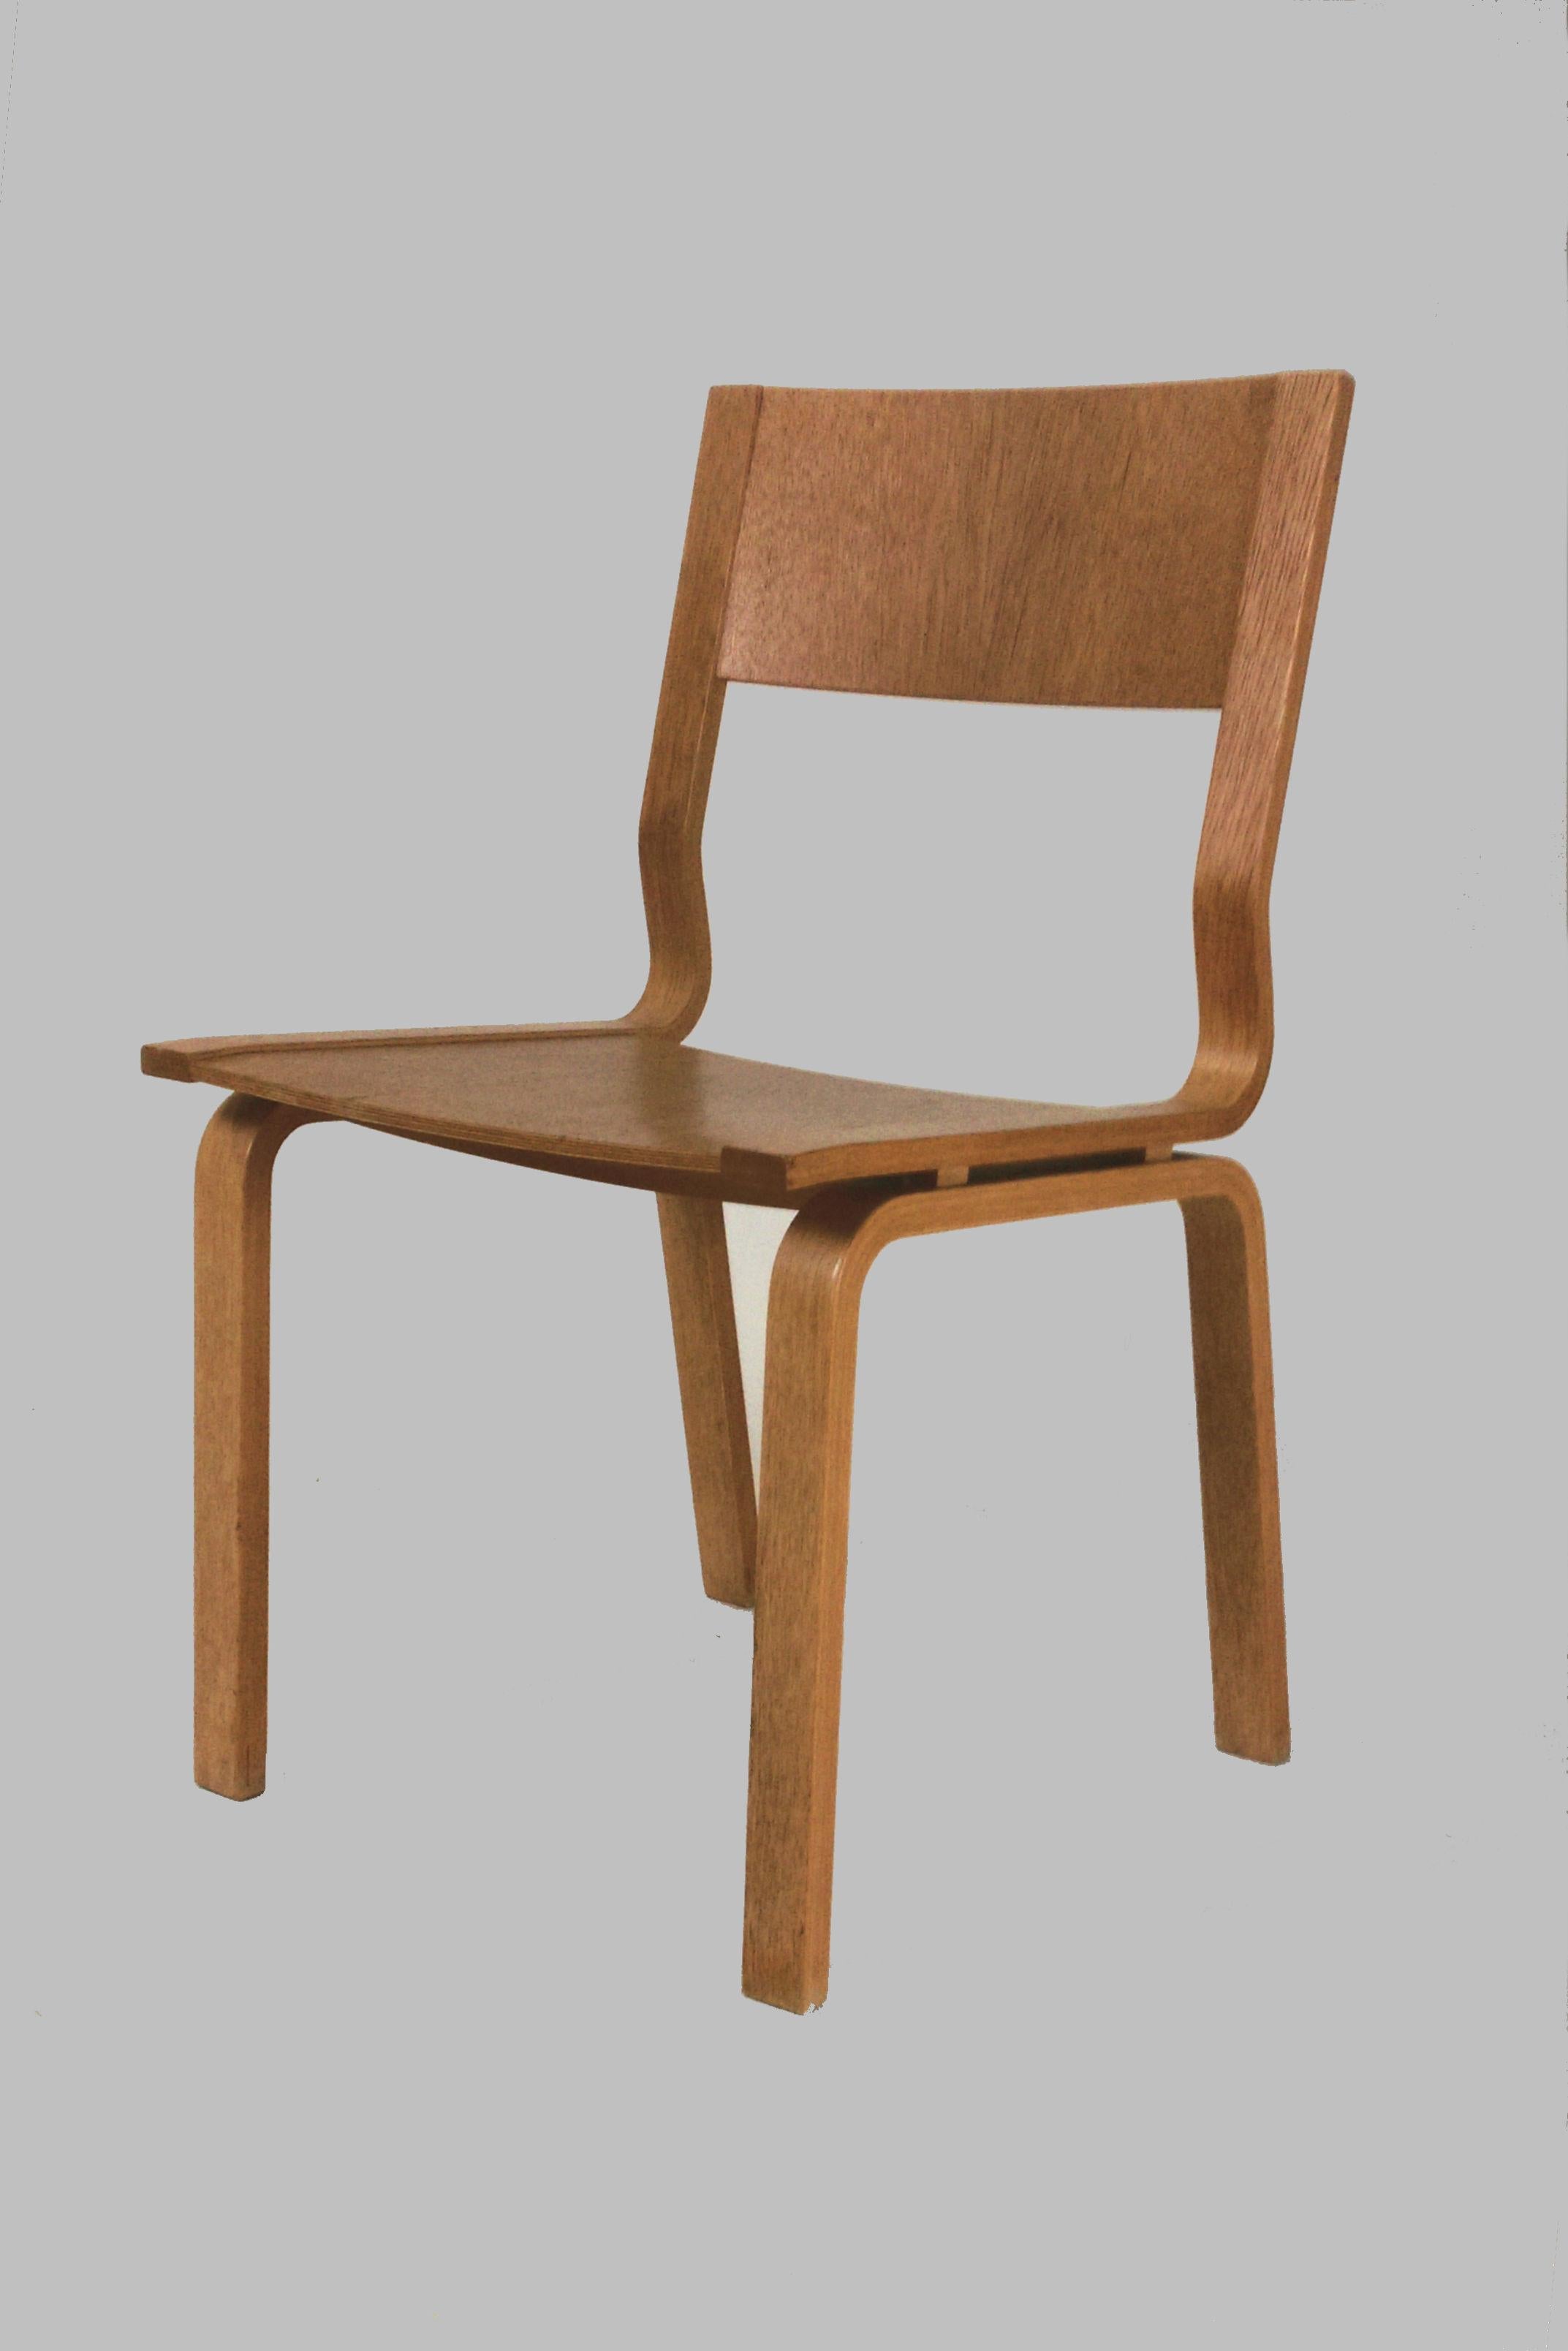 1965 Danish Arne Jacobsen Saint Catherines Desk and Chair in Oak by Fritz Hansen For Sale 3